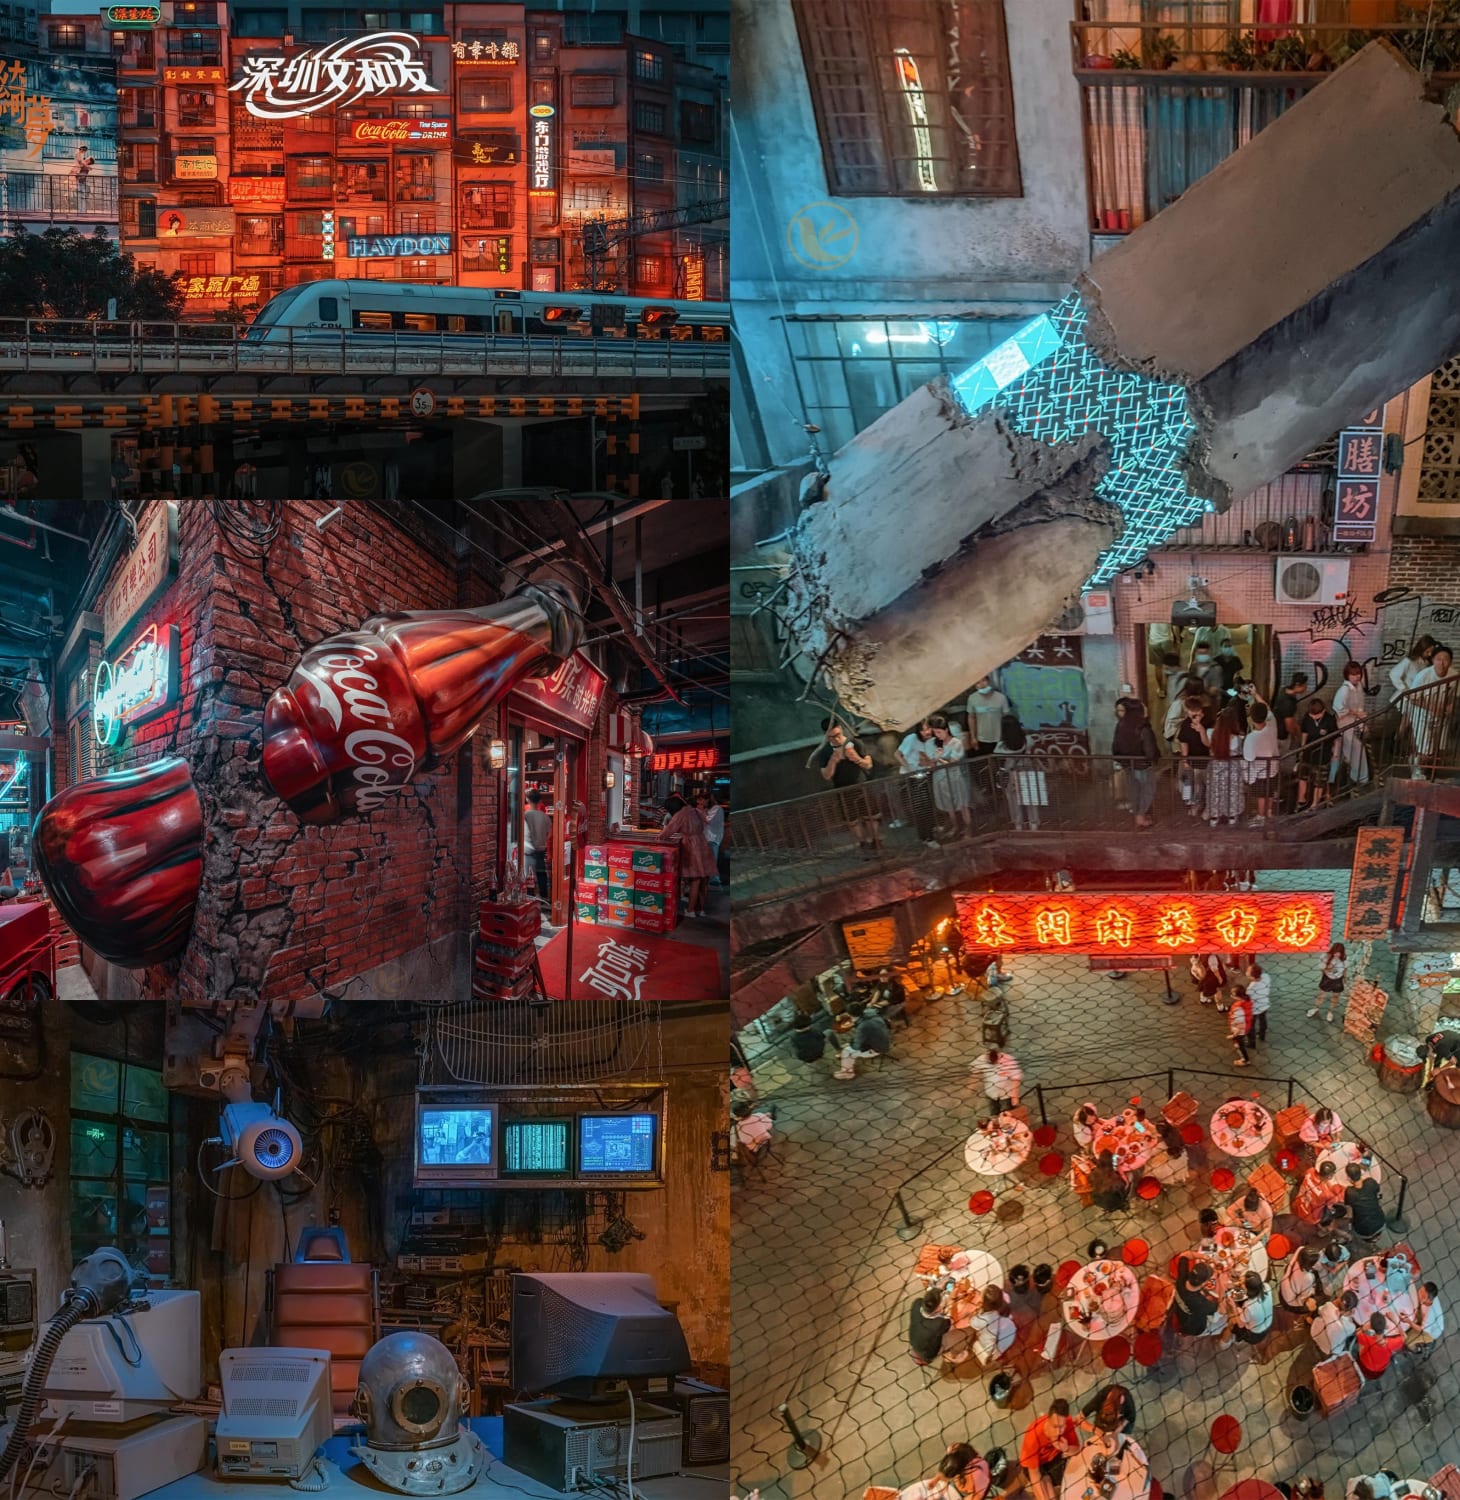 Shenzhen Wenheyou, a decorated, retro sci/fi themed food court, Shenzhen